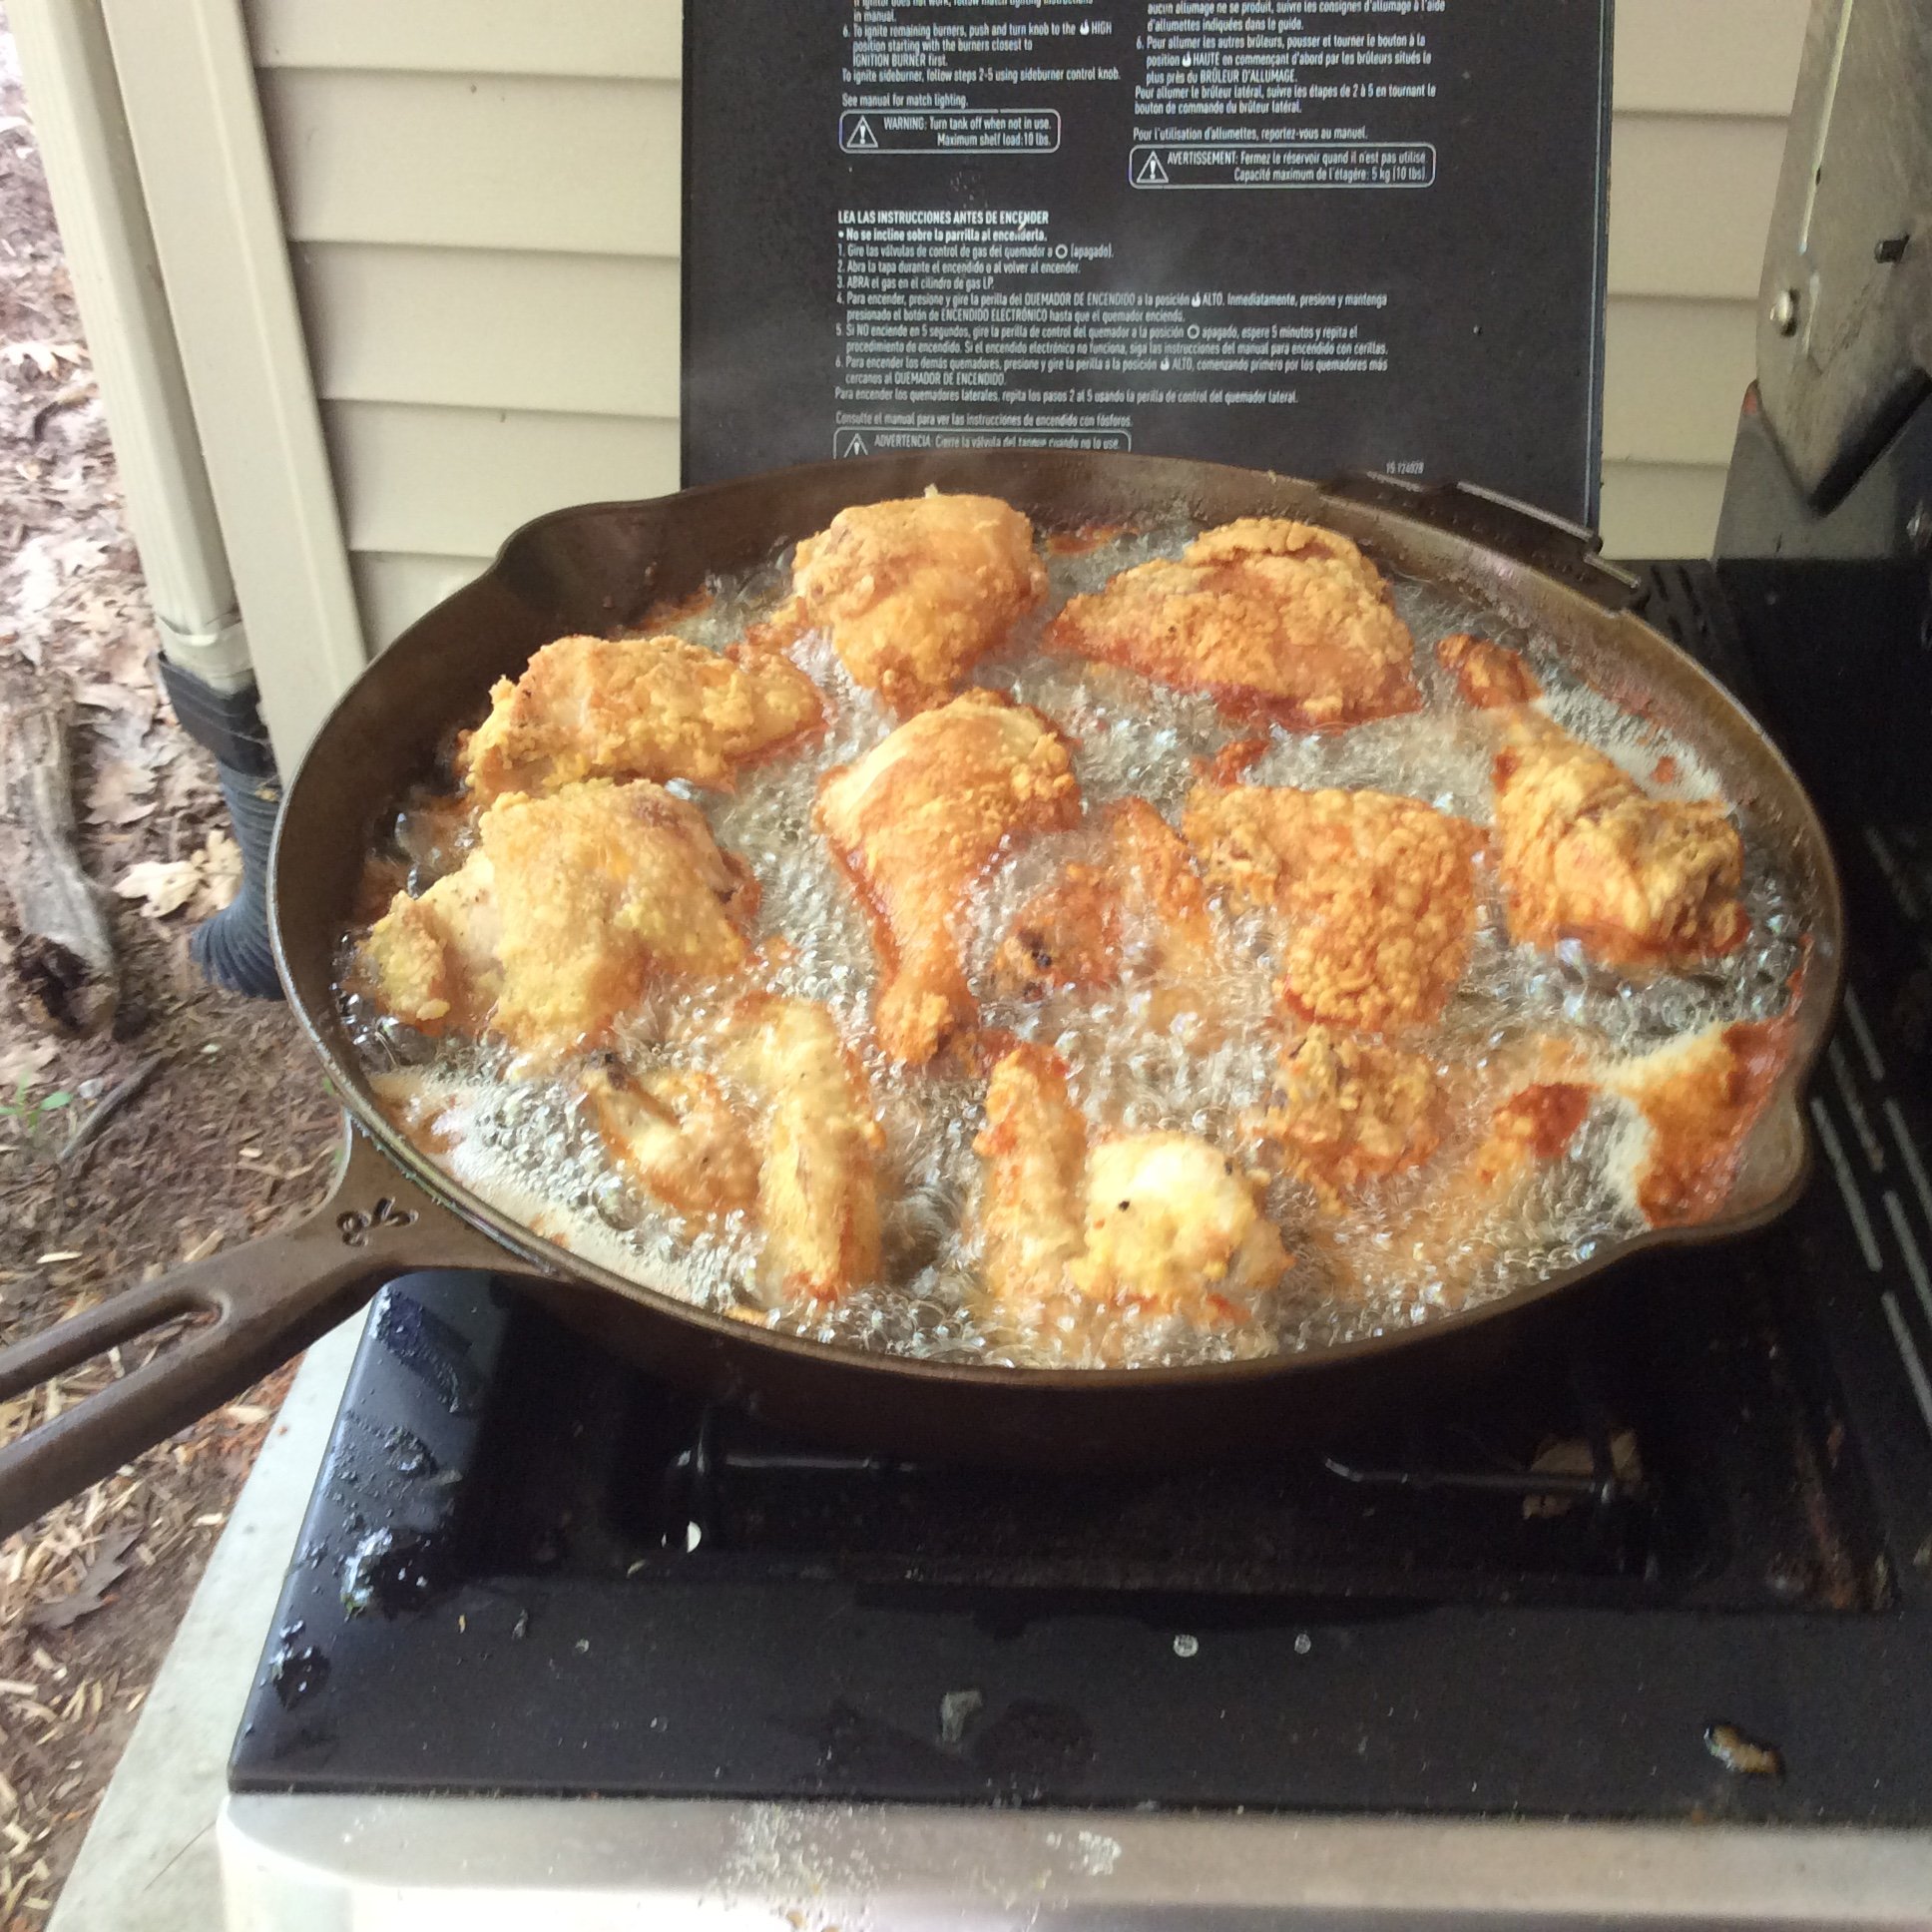 Previous Happening: Chicken fried in pork lard